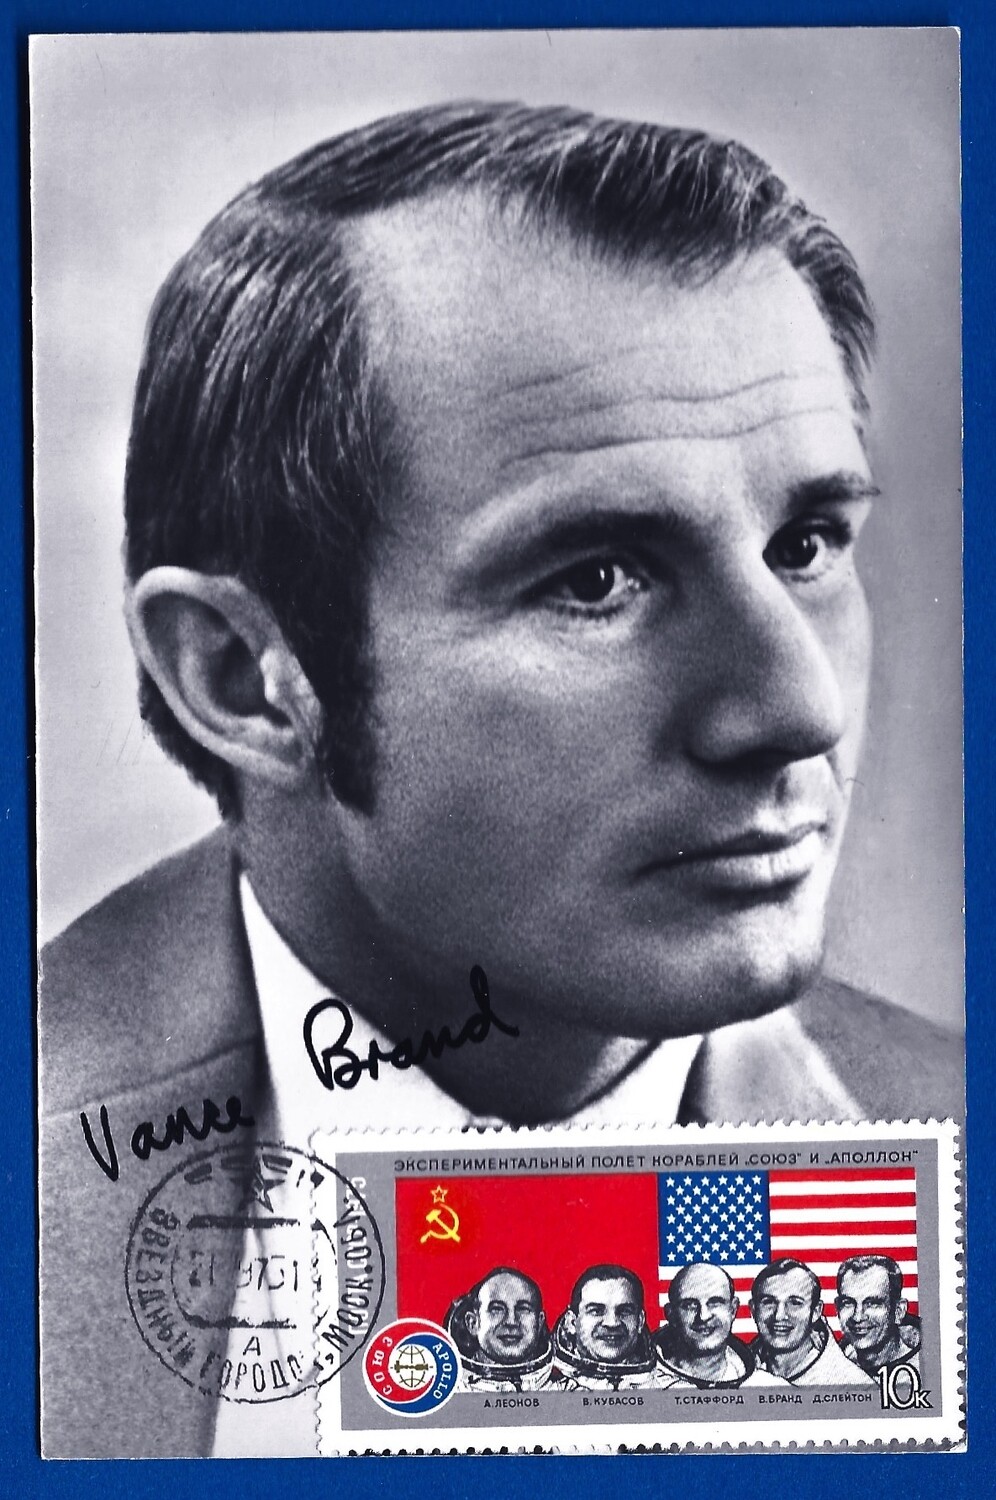 Vance D. Brand NASA astronaut signed postcard